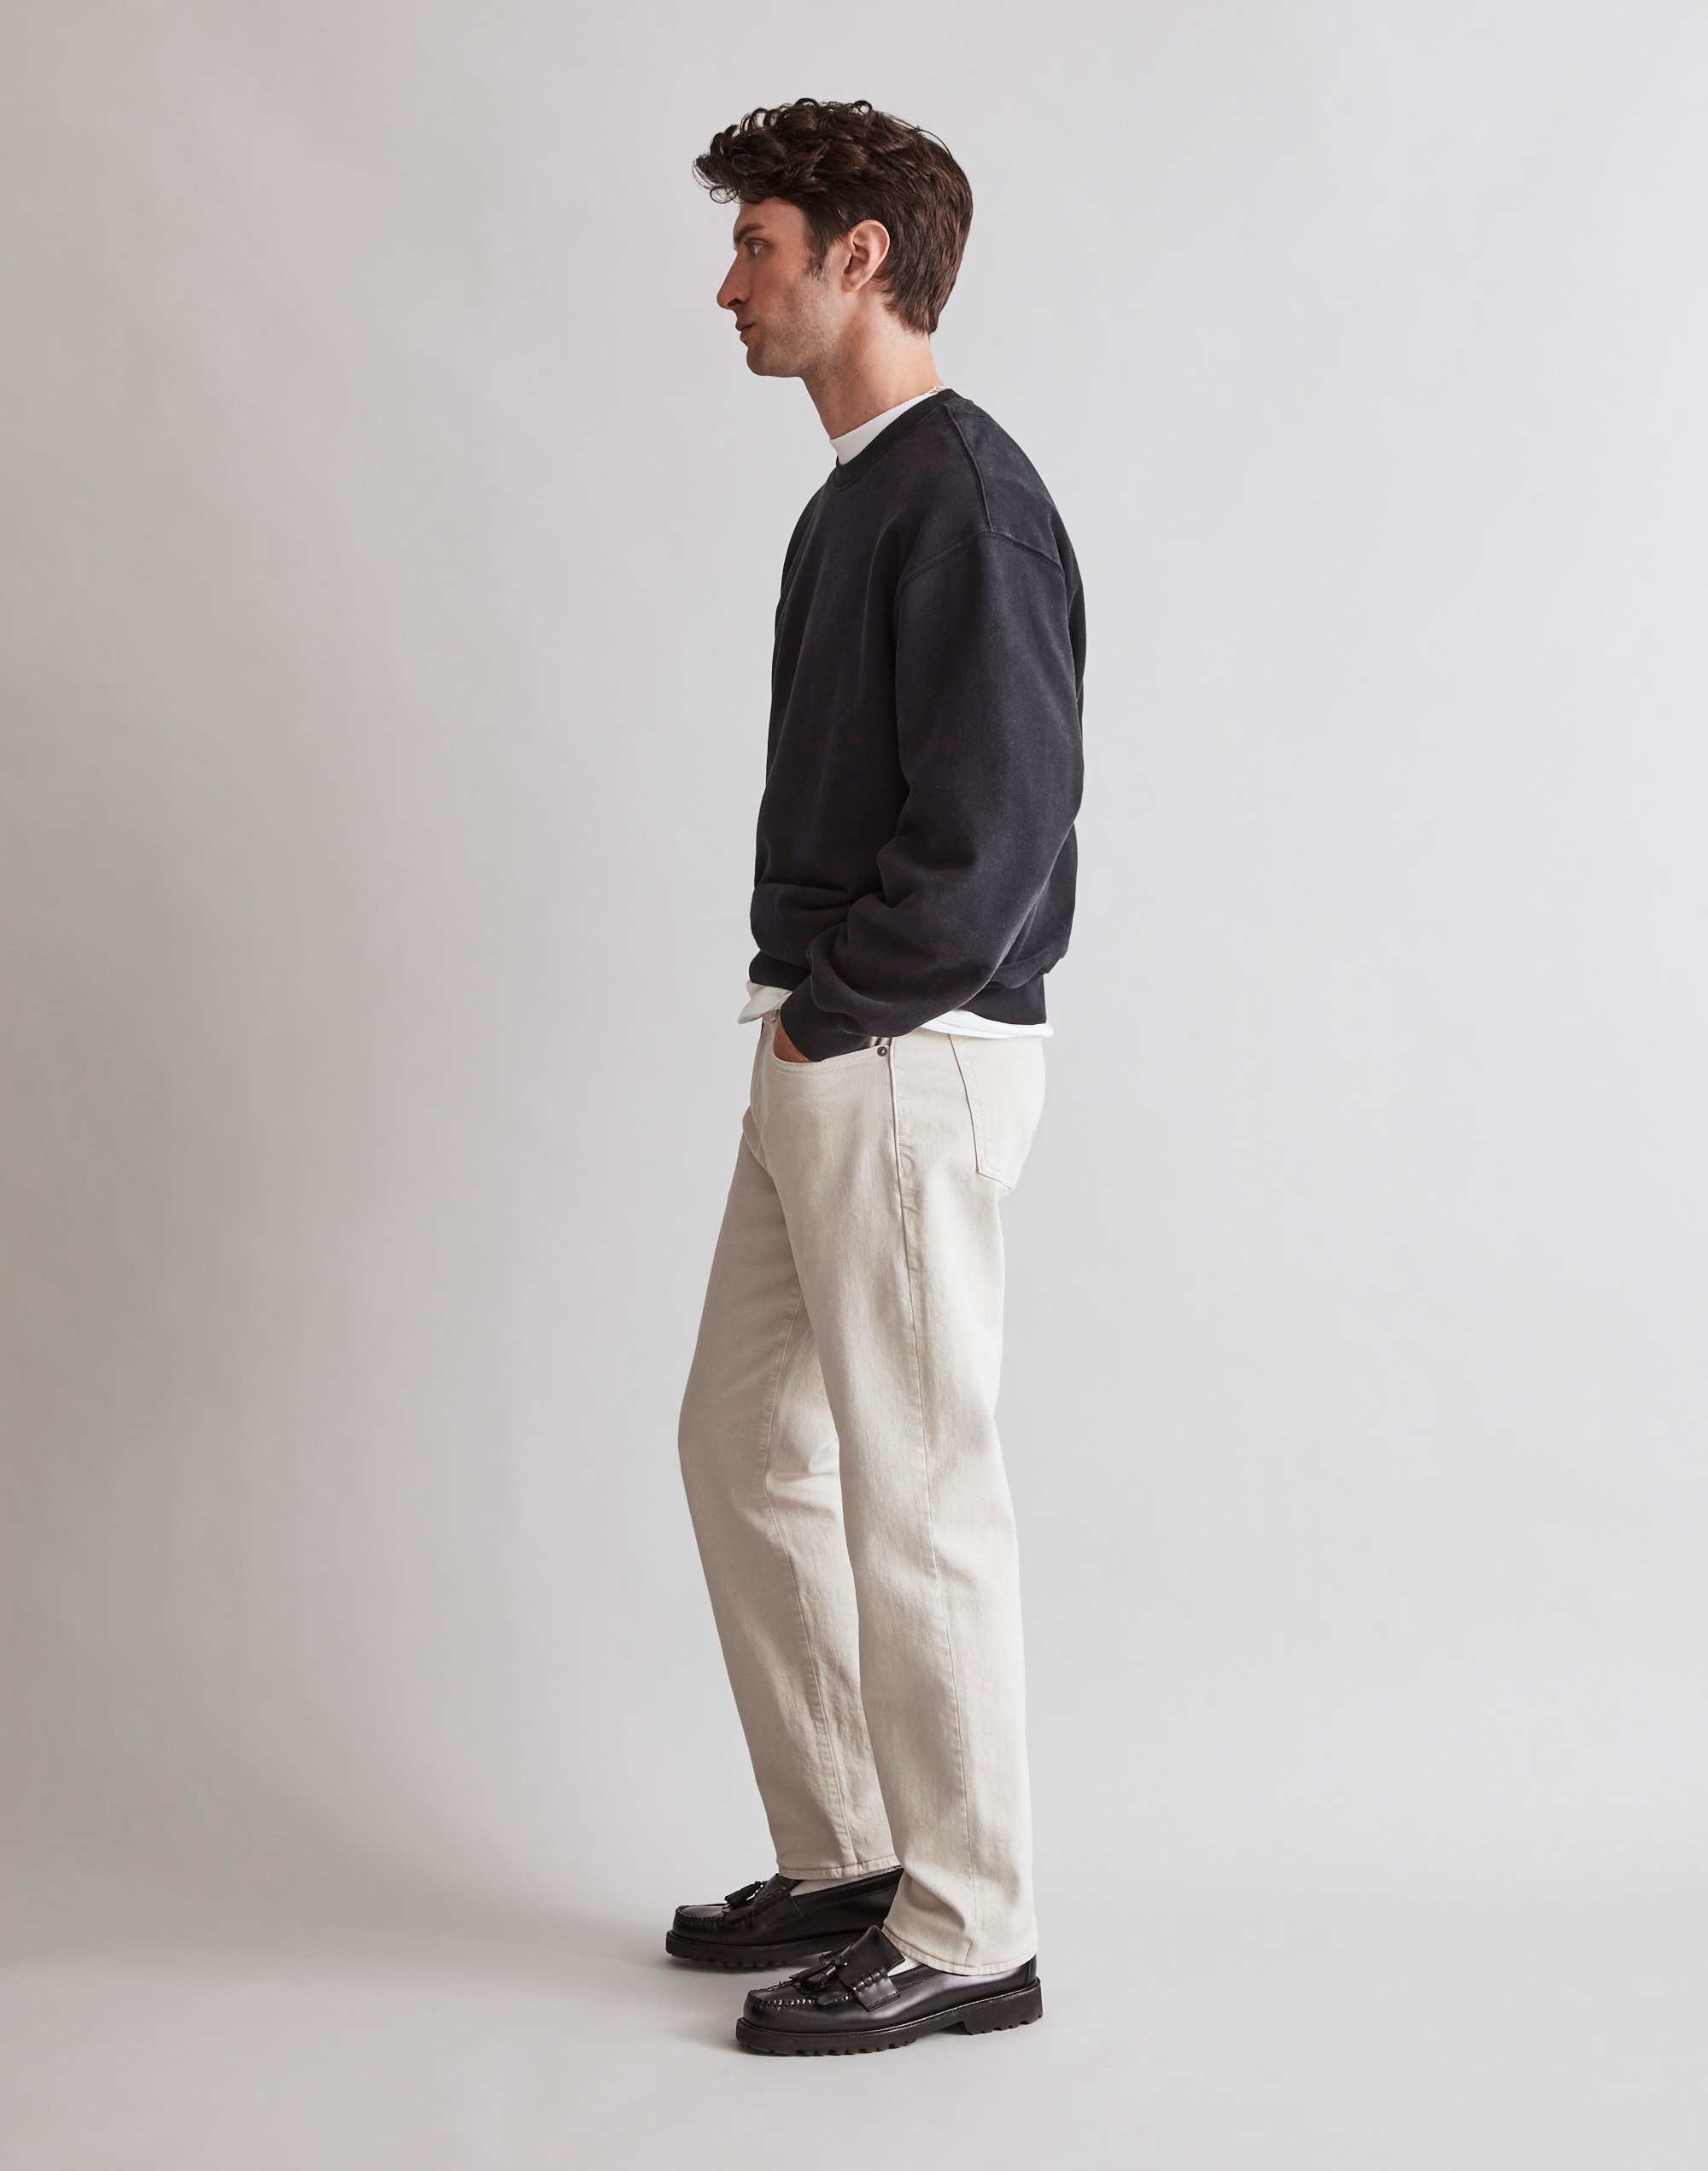 The 1991 Straight-Leg Garment-Dyed Jean